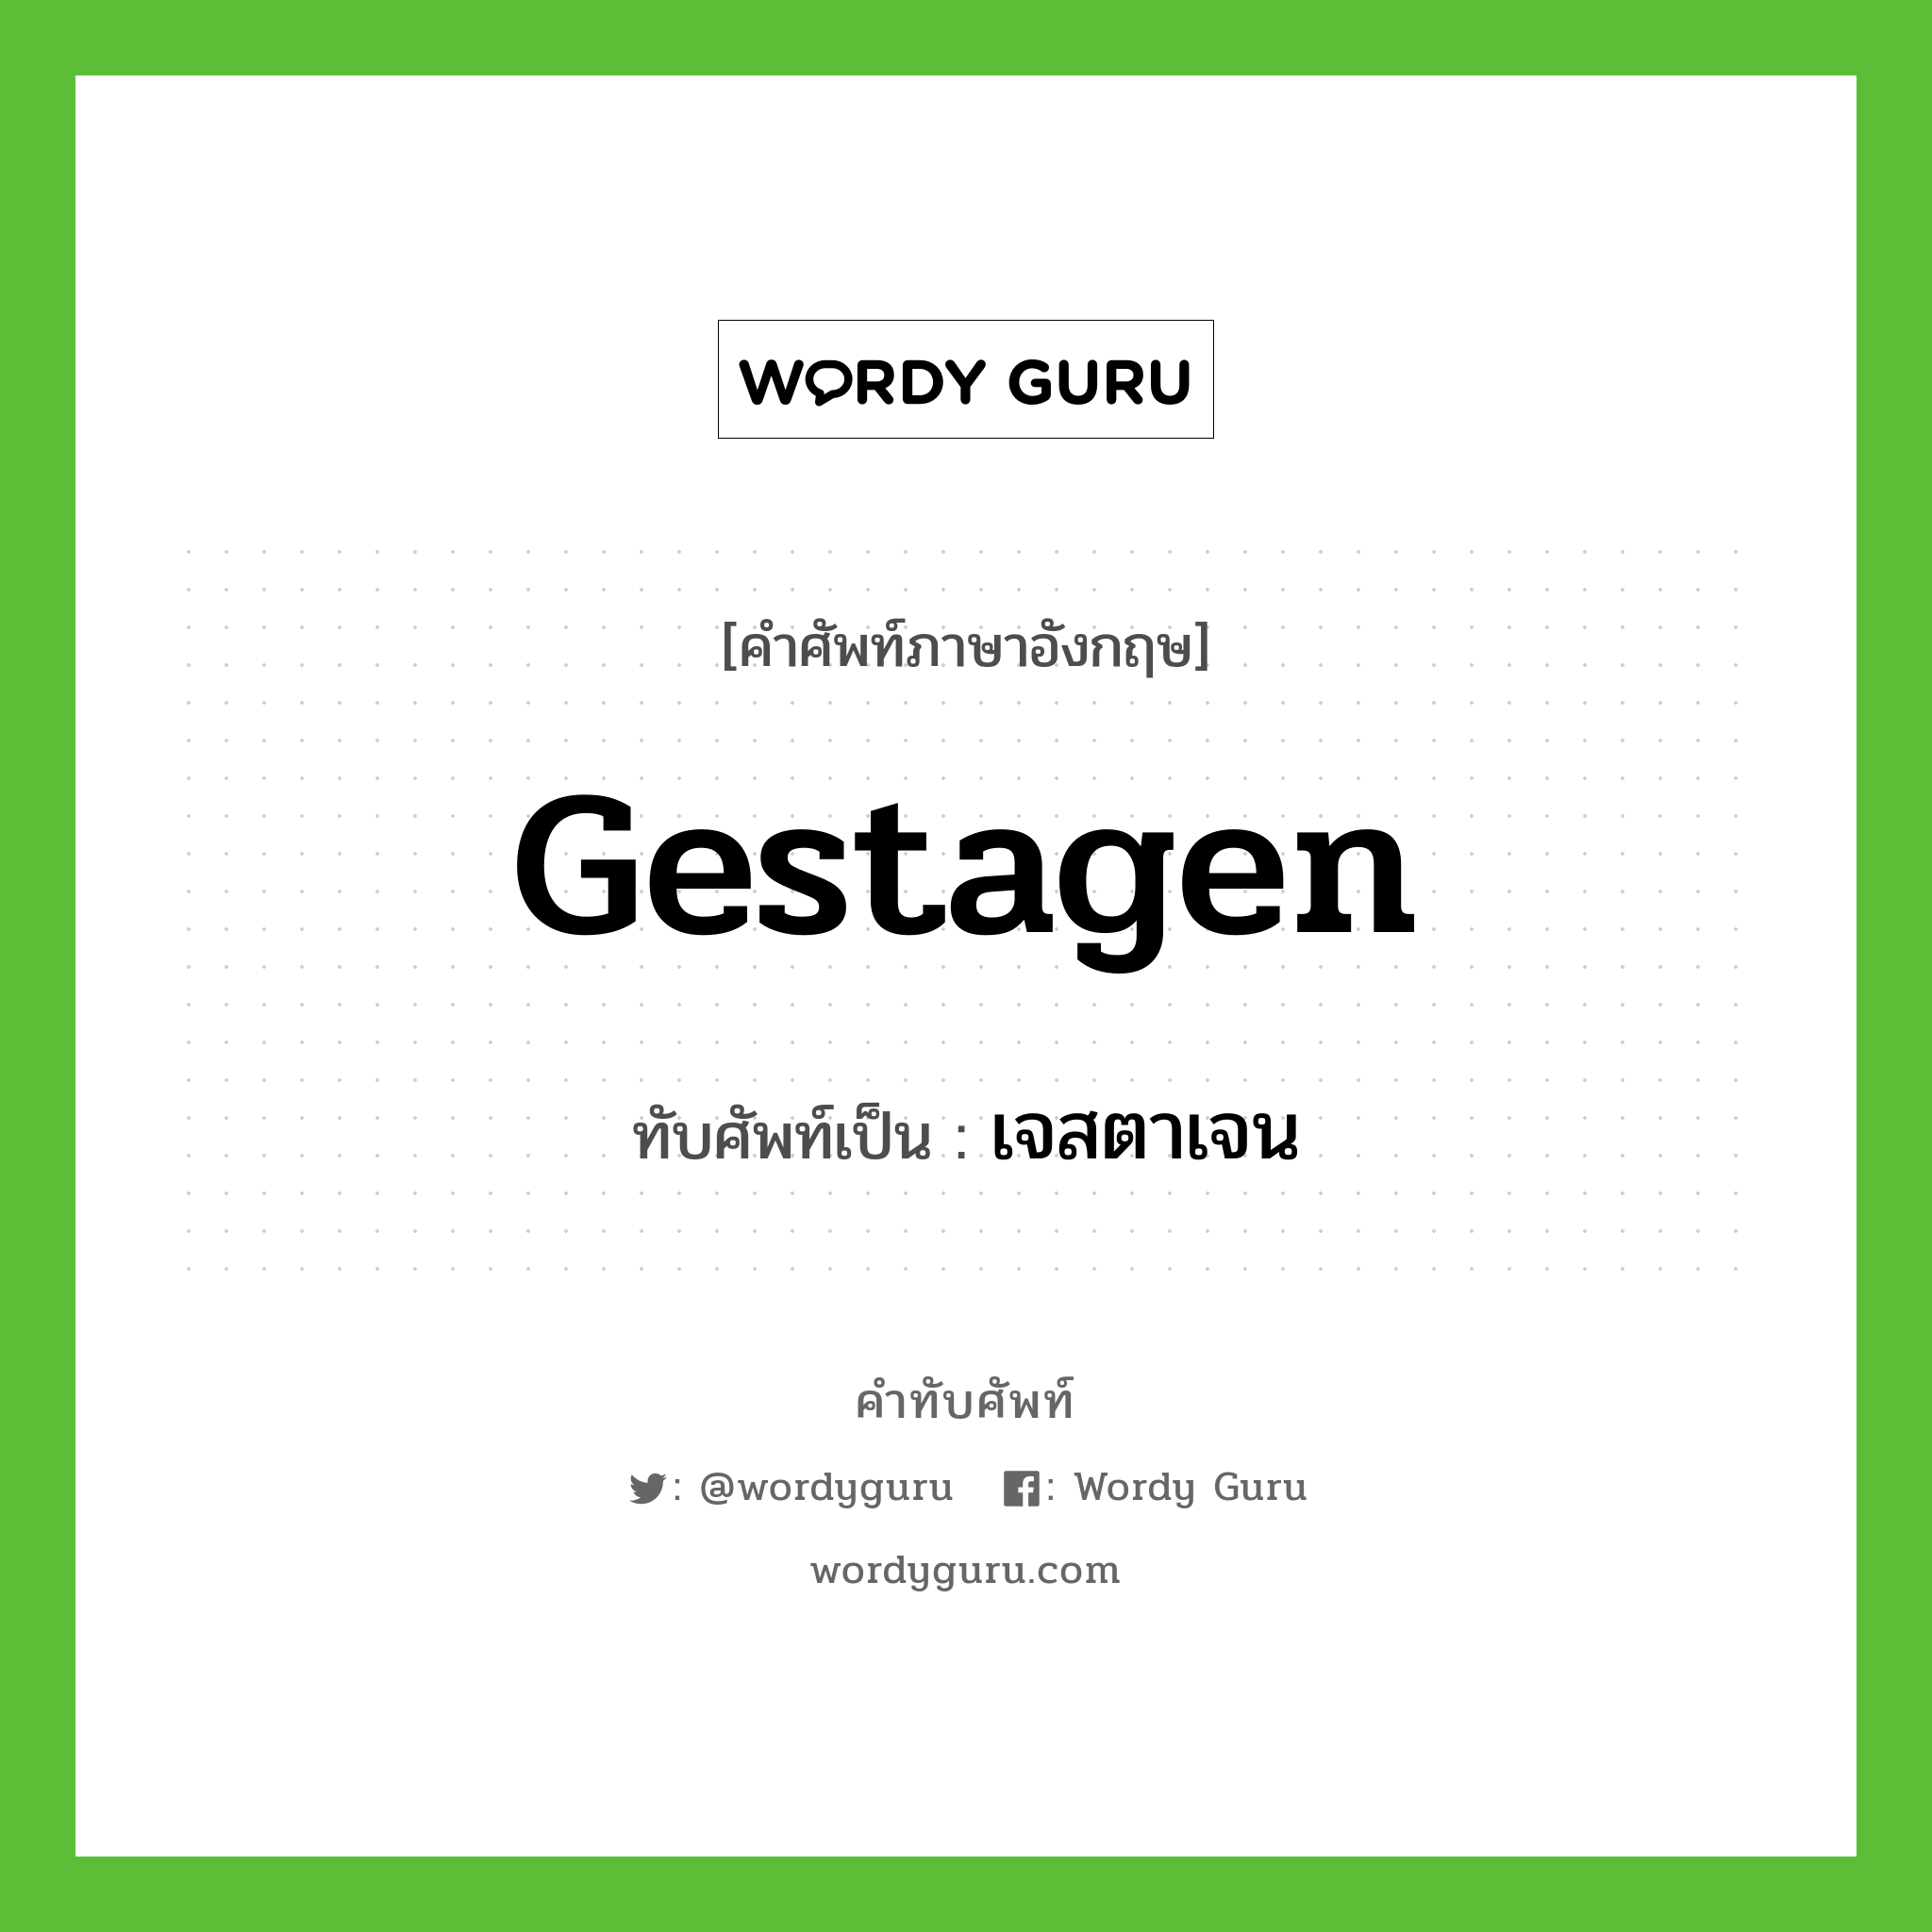 gestagen เขียนเป็นคำไทยว่าอะไร?, คำศัพท์ภาษาอังกฤษ gestagen ทับศัพท์เป็น เจสตาเจน